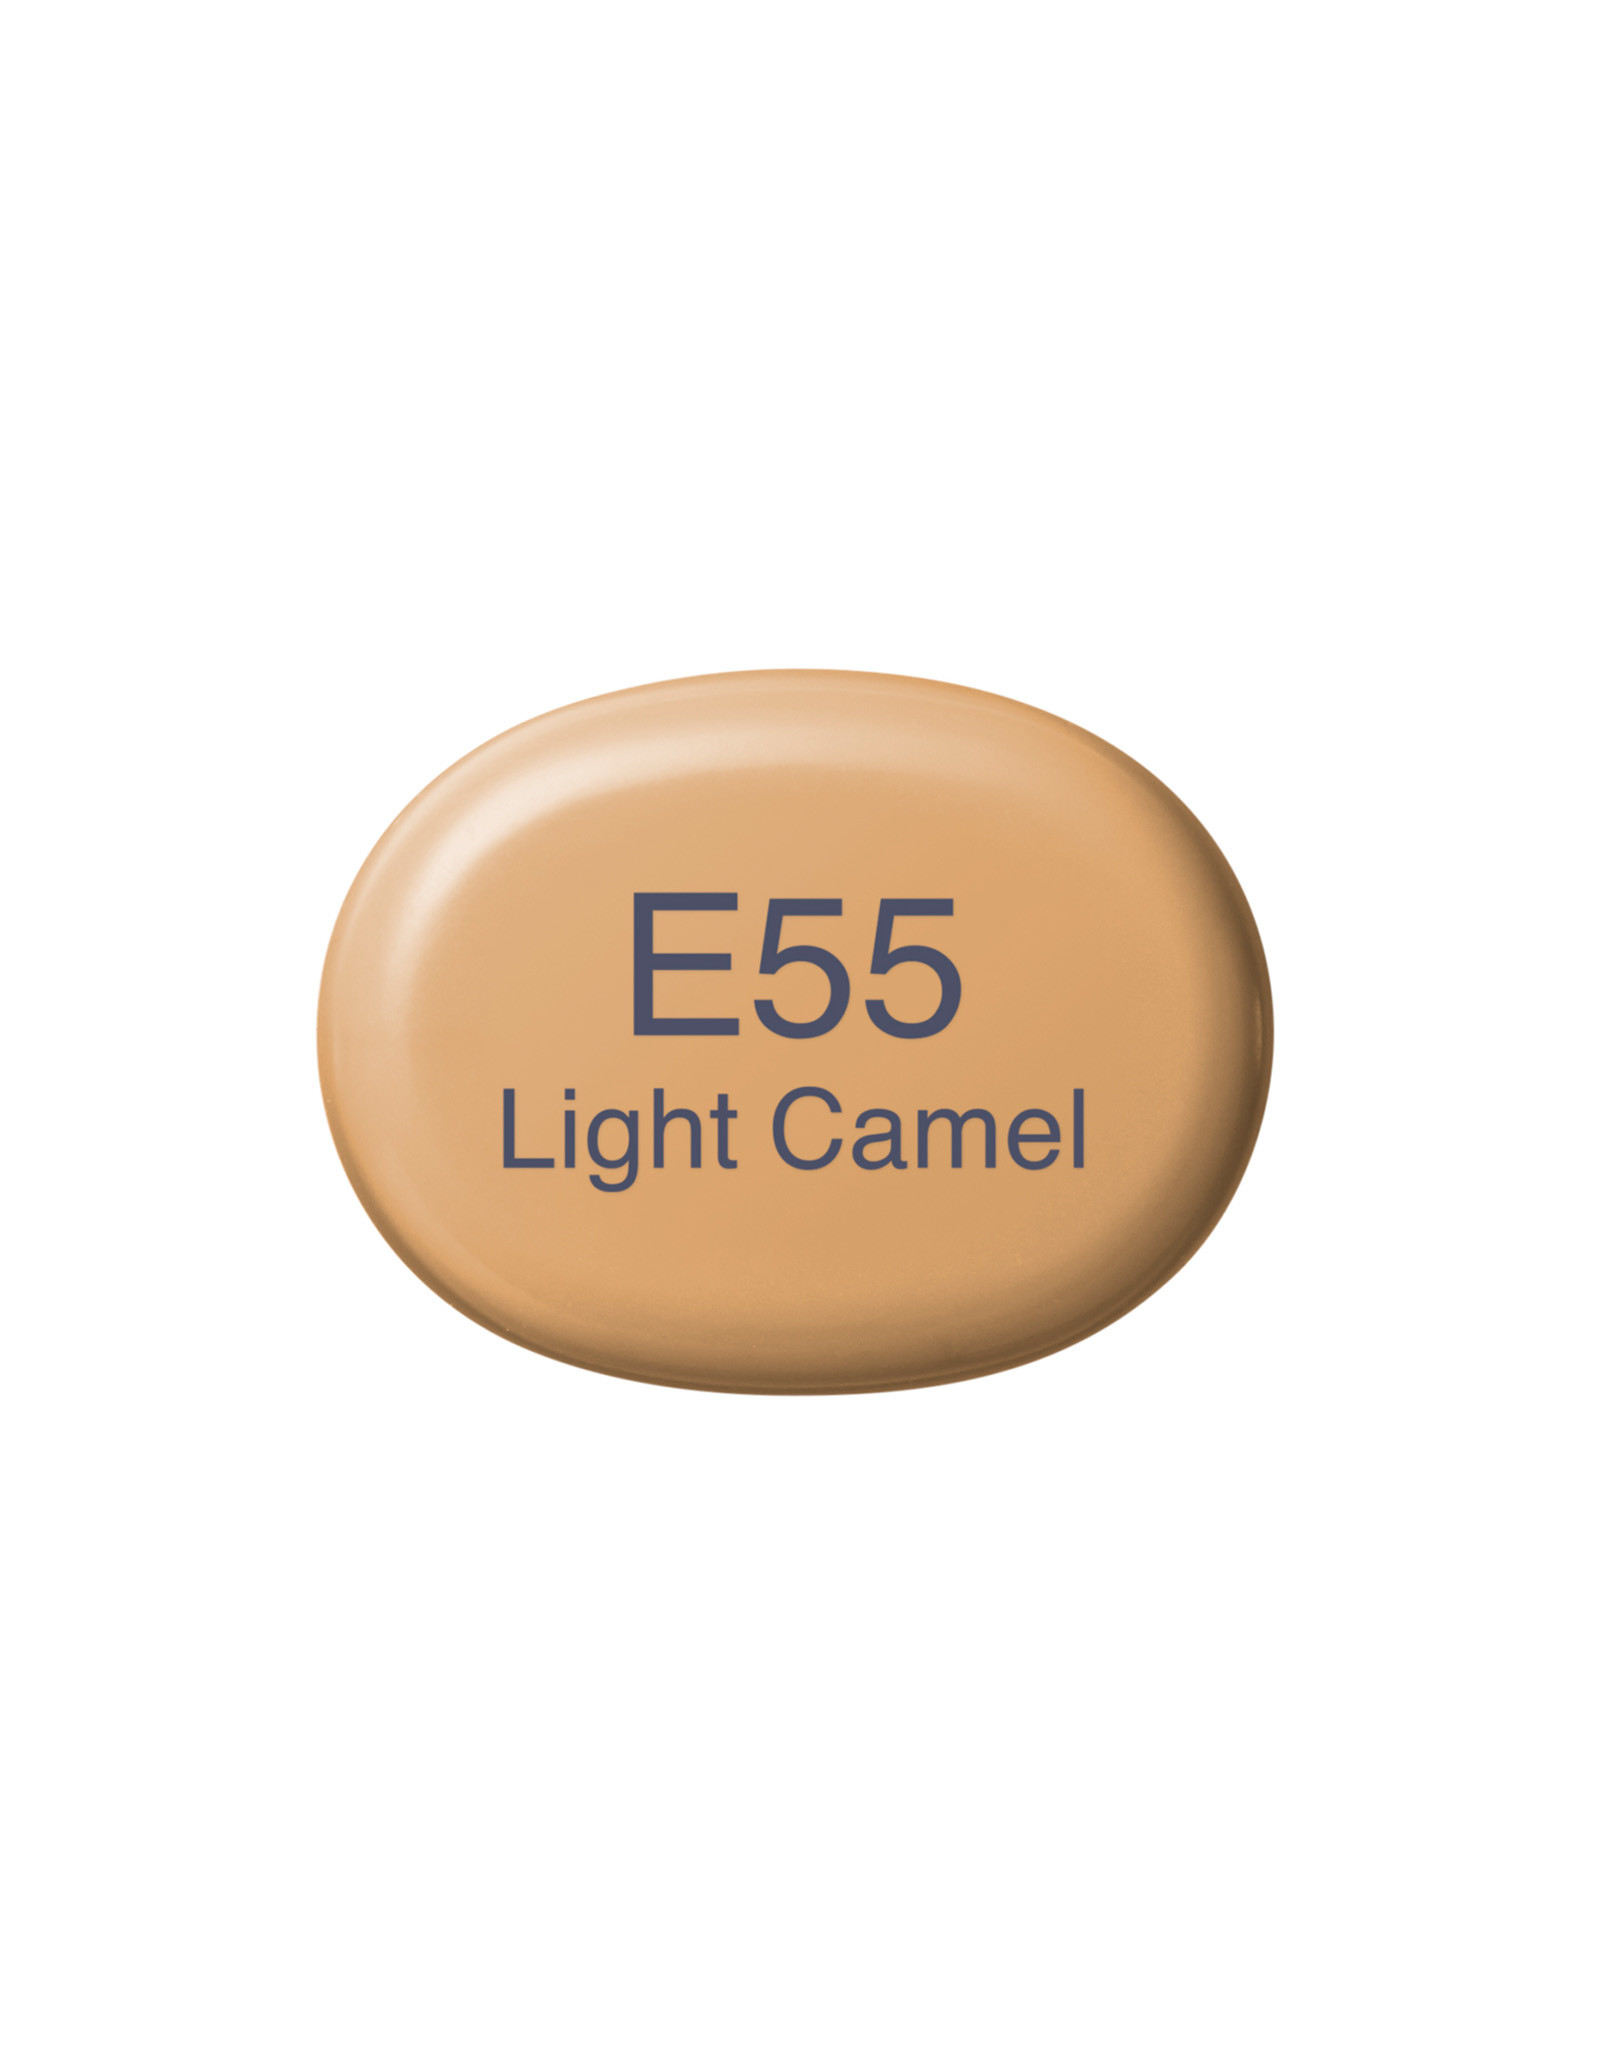 COPIC COPIC Sketch Marker E55 Light Camel